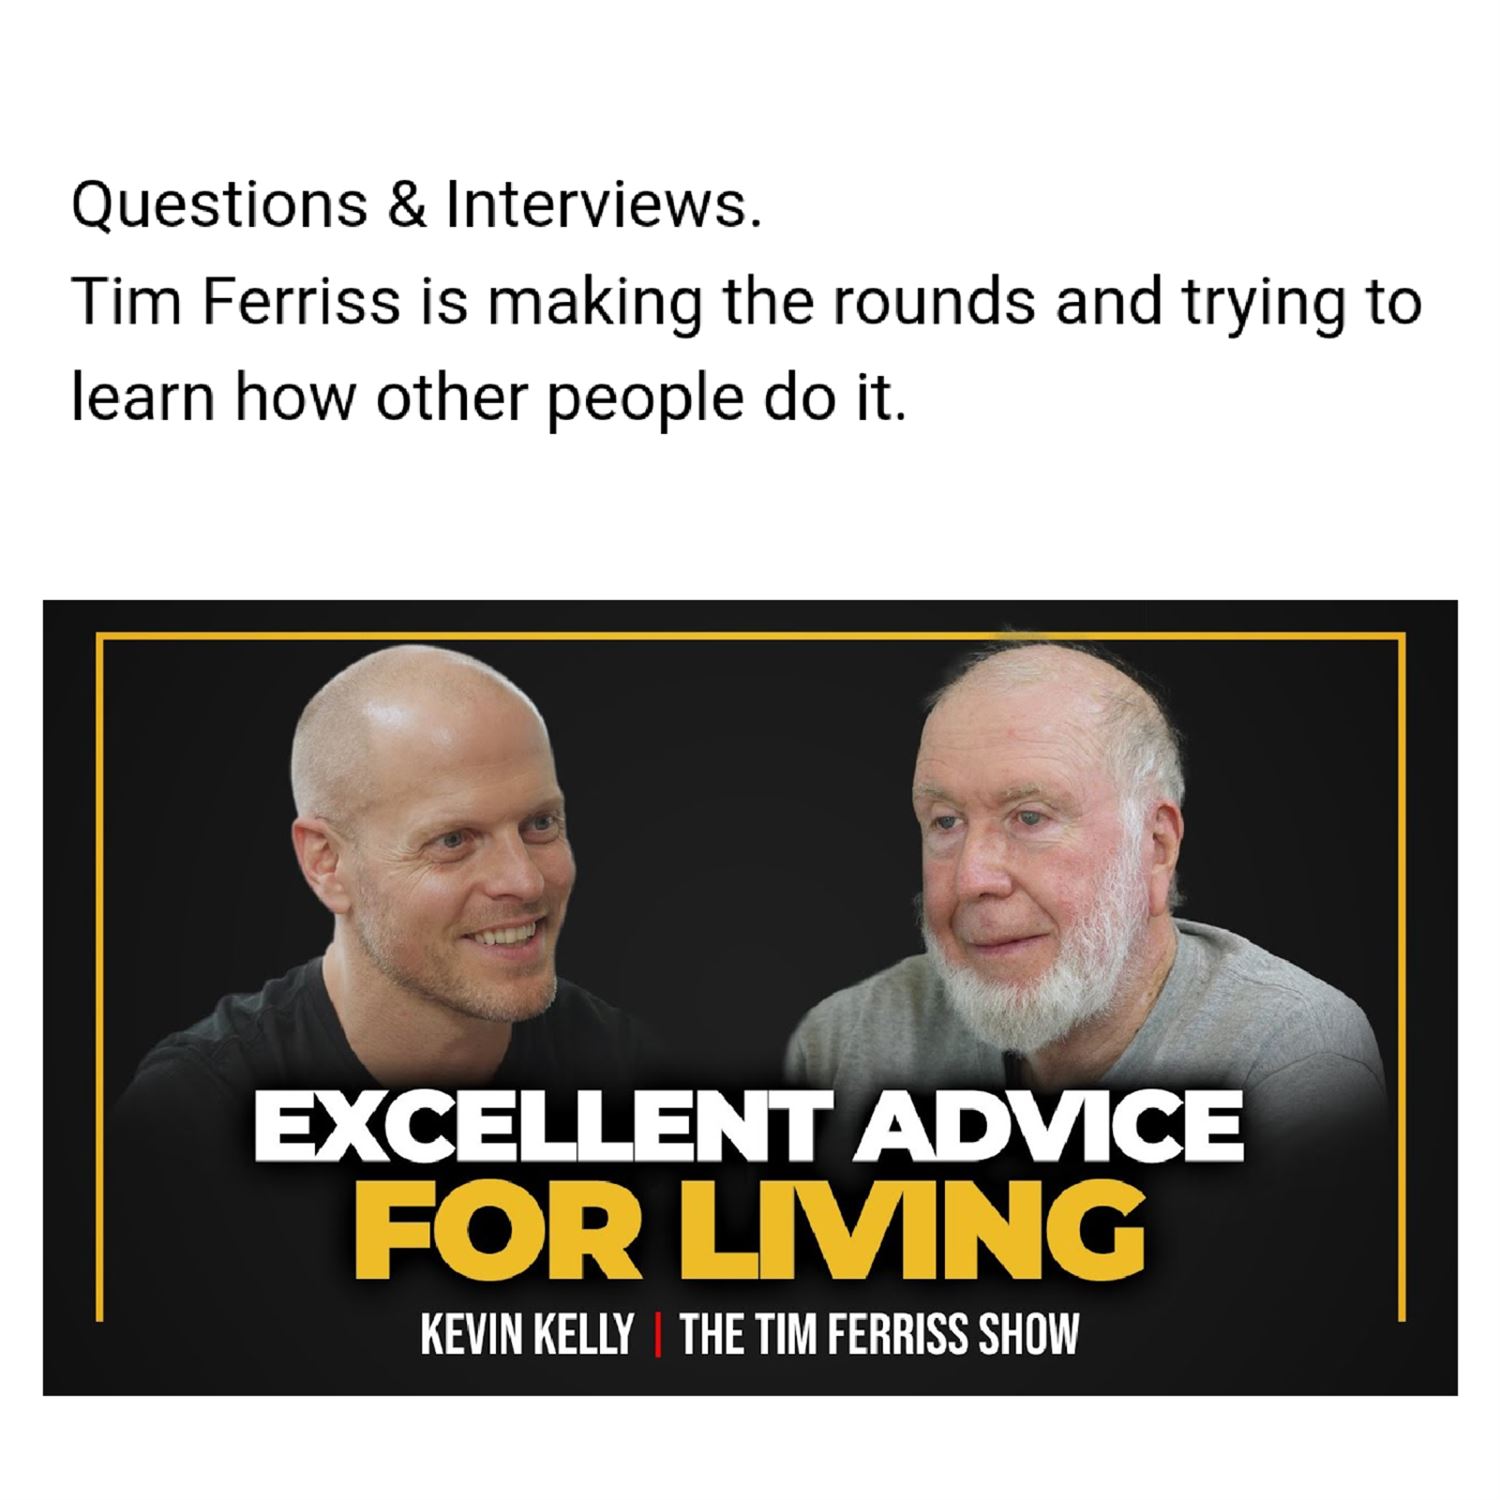 Interview or conversation?